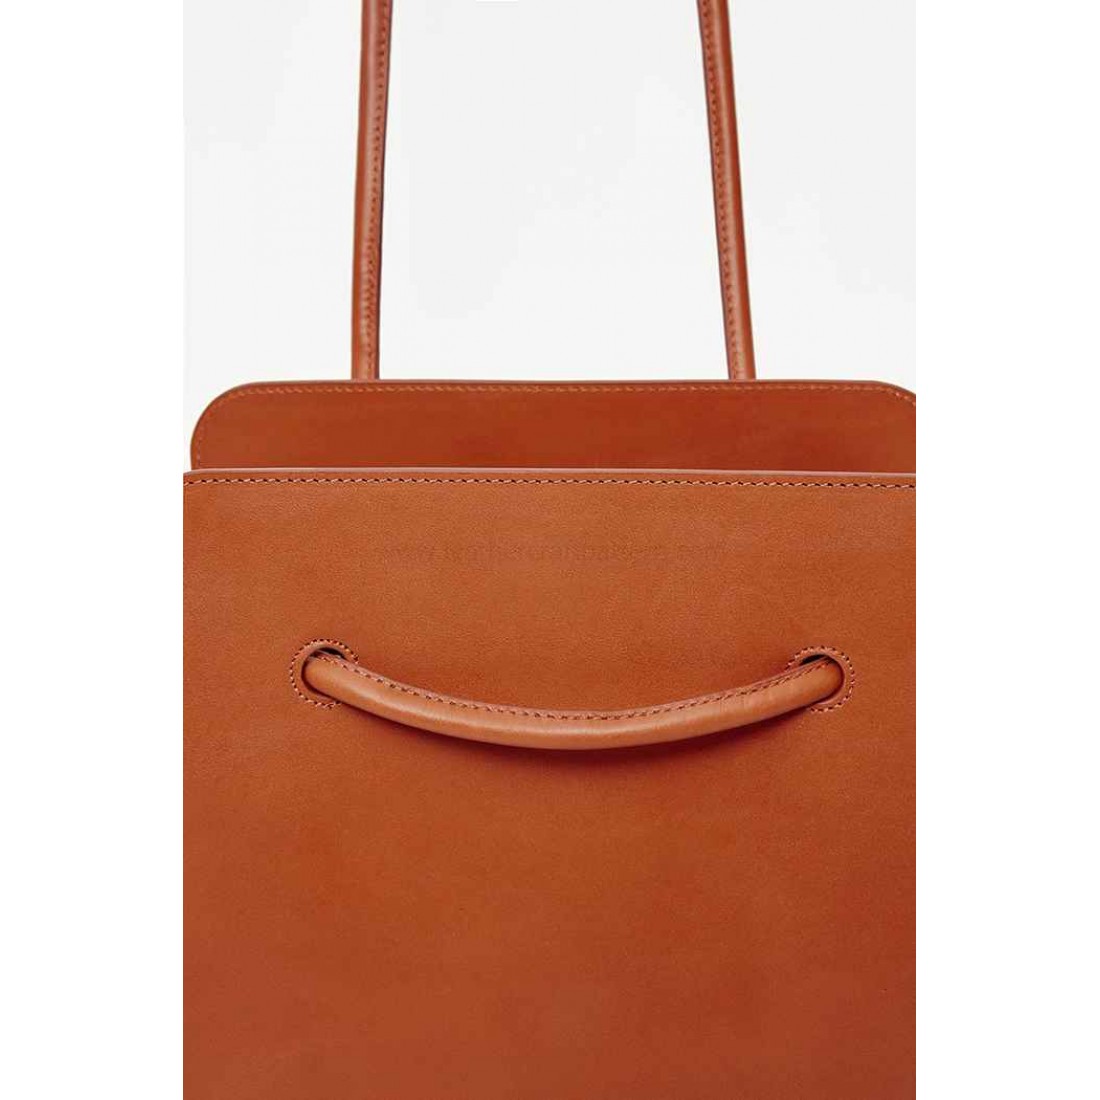 leather Bucket bag pattern, leather tote bag pattern pdf download ...